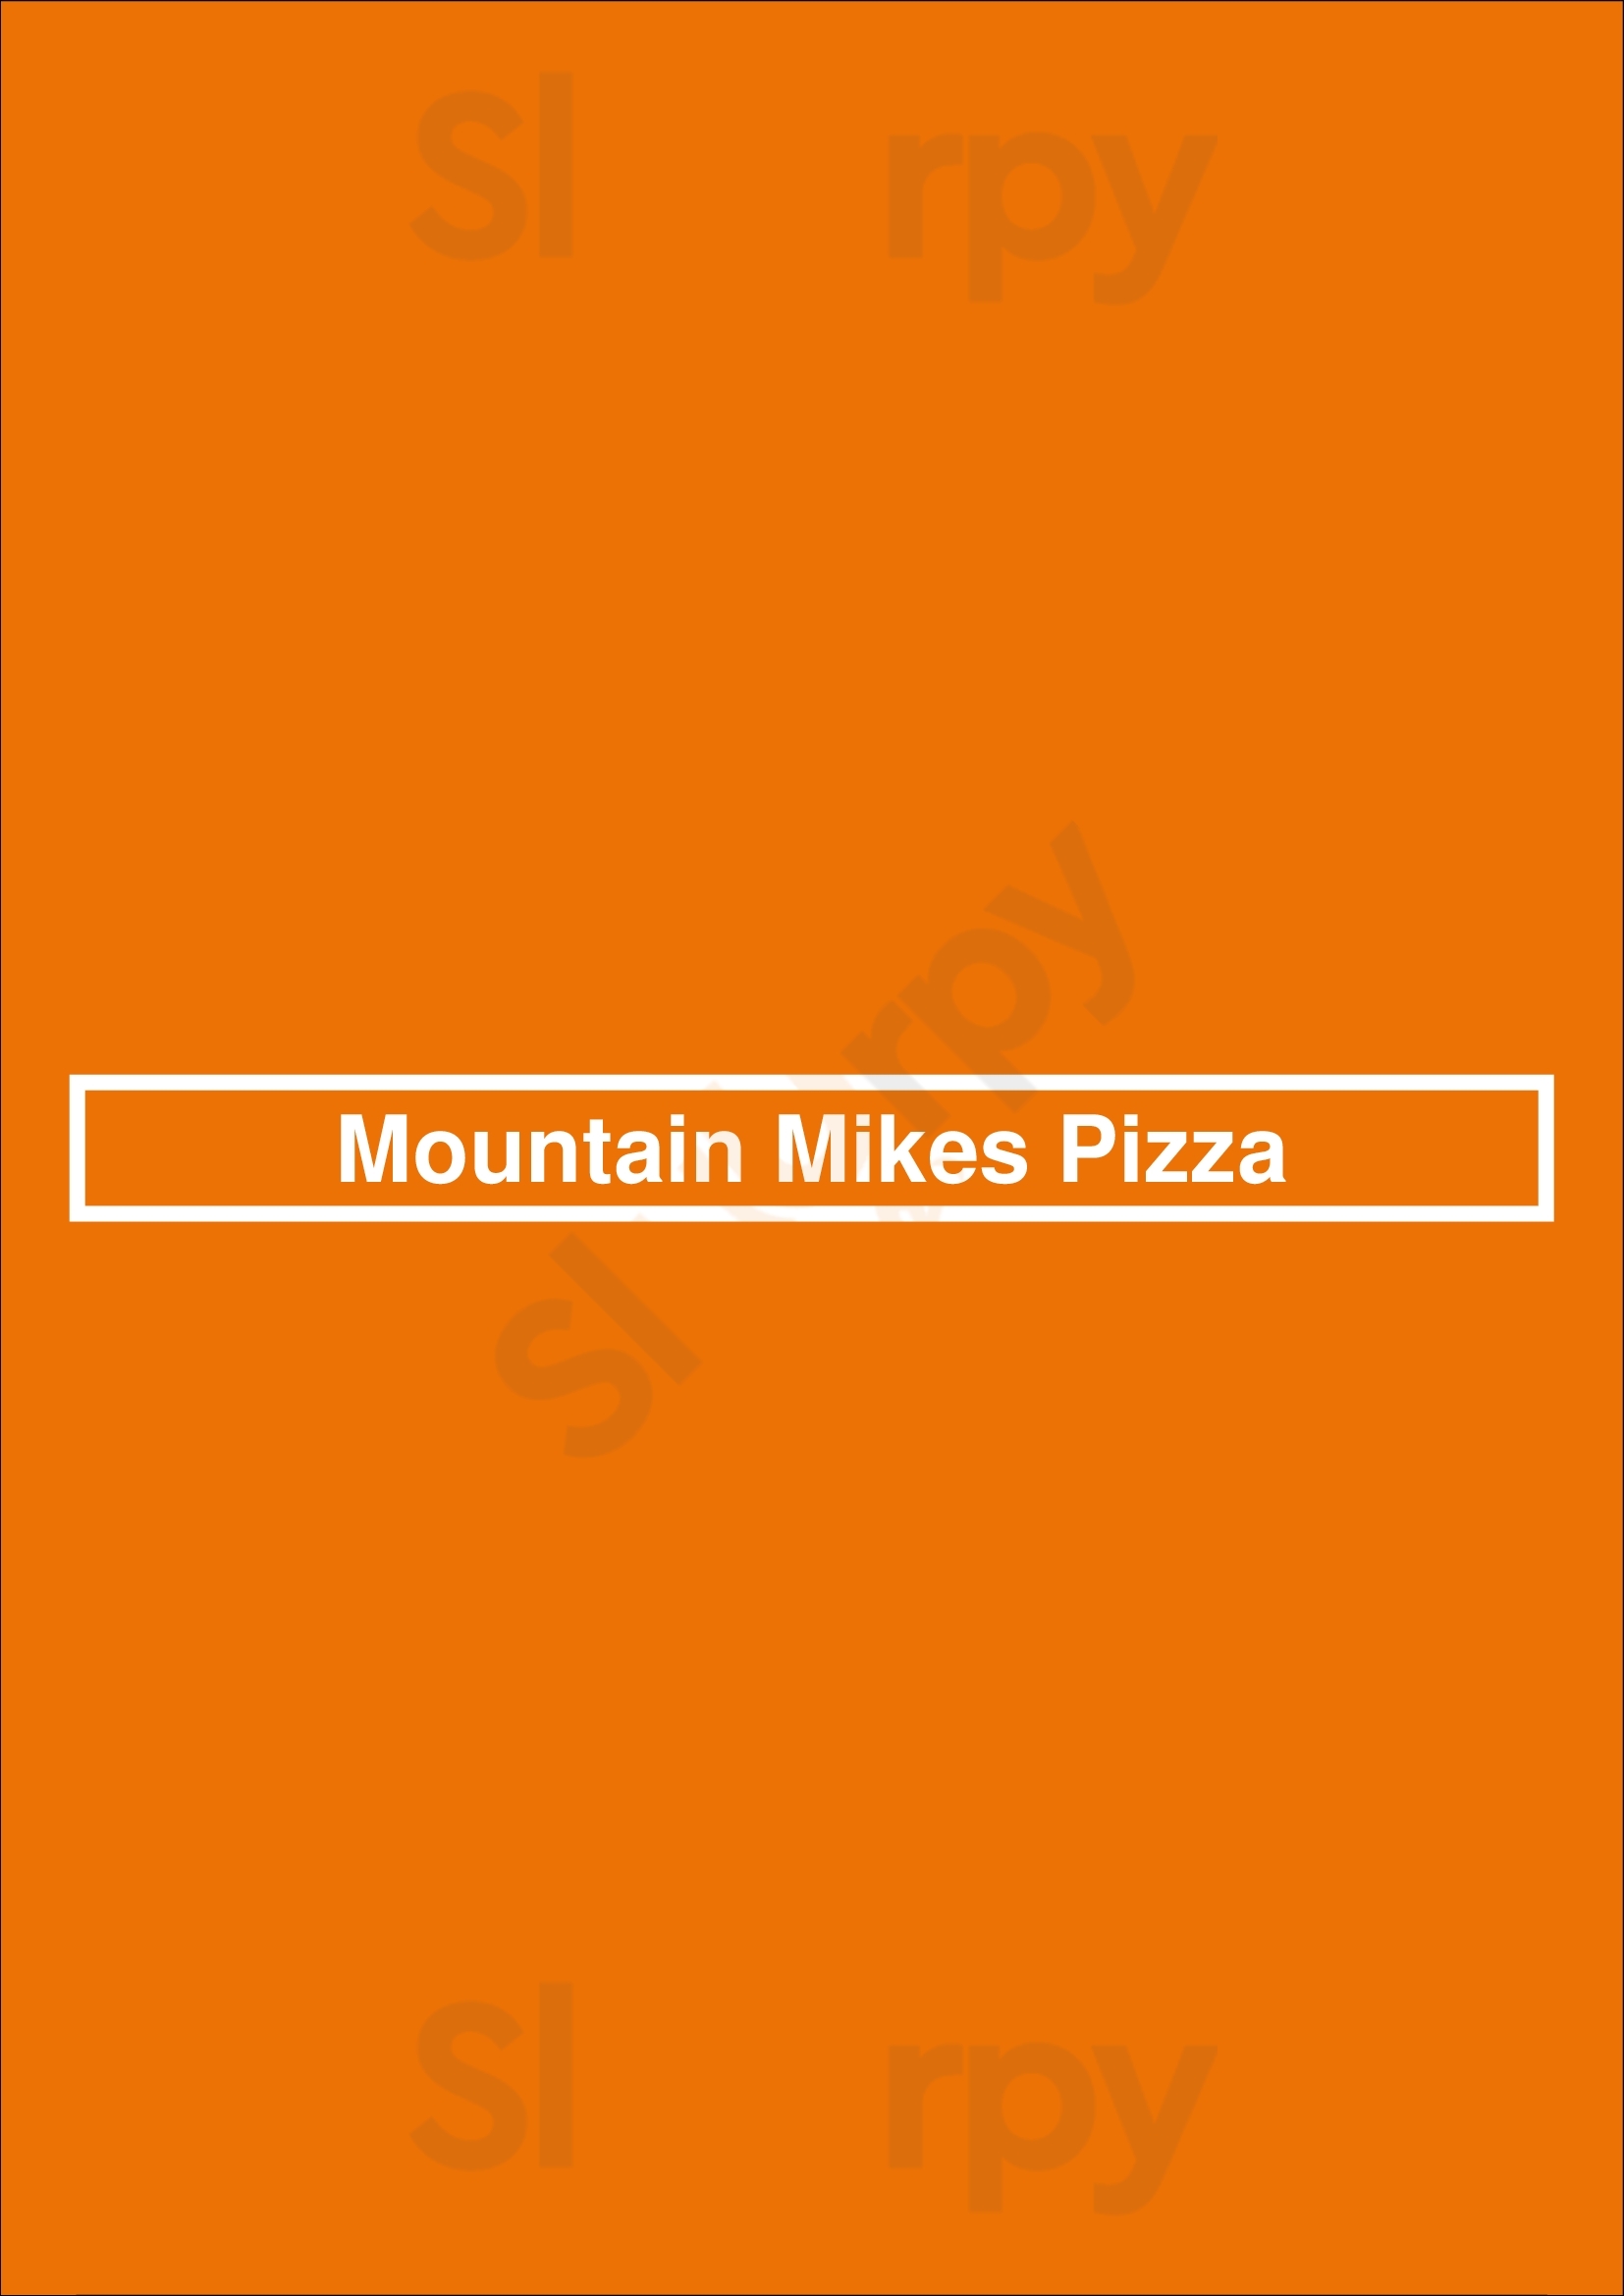 Mountain Mikes Pizza Oakland Menu - 1